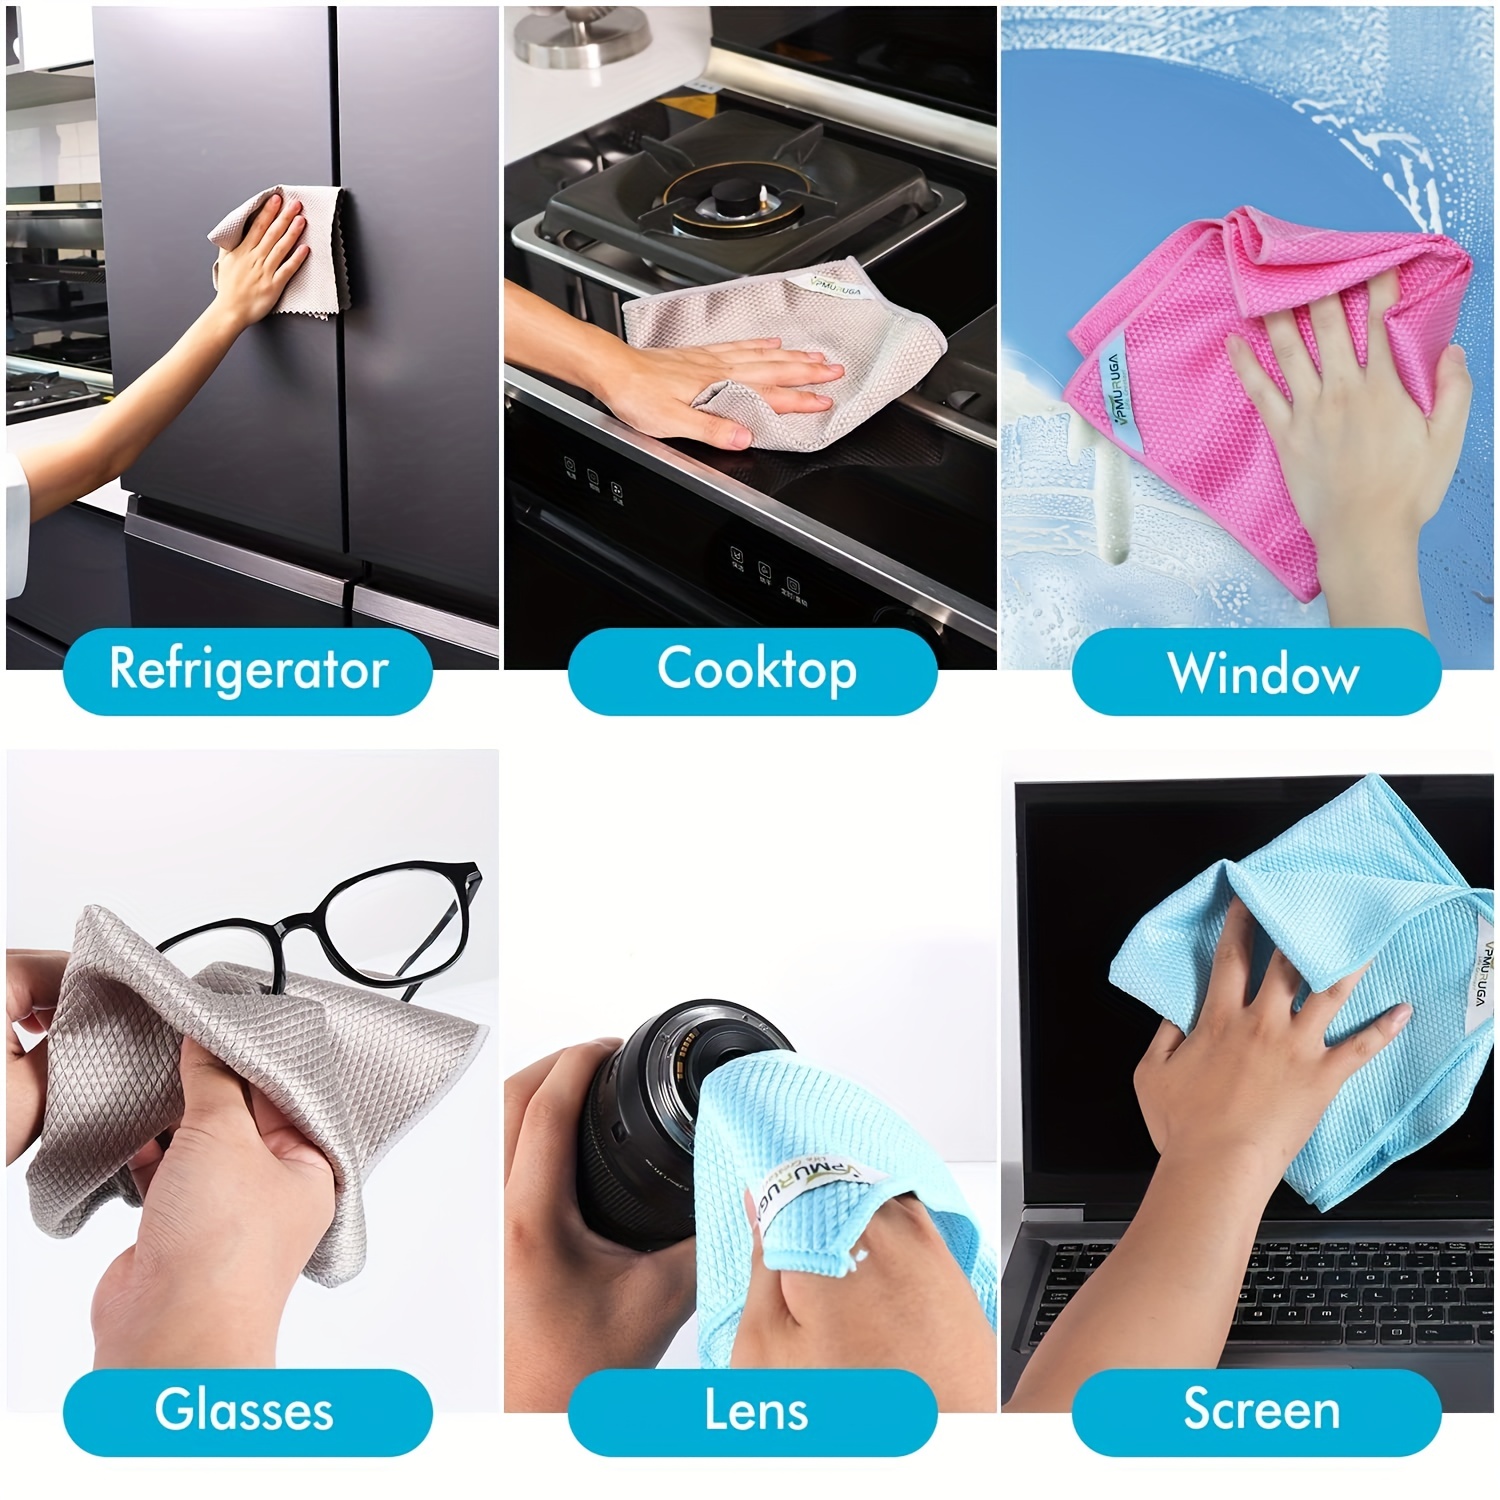 Microfiber Glass Cleaning Cloths - 8 Pack | Lint Free - Streak Free 